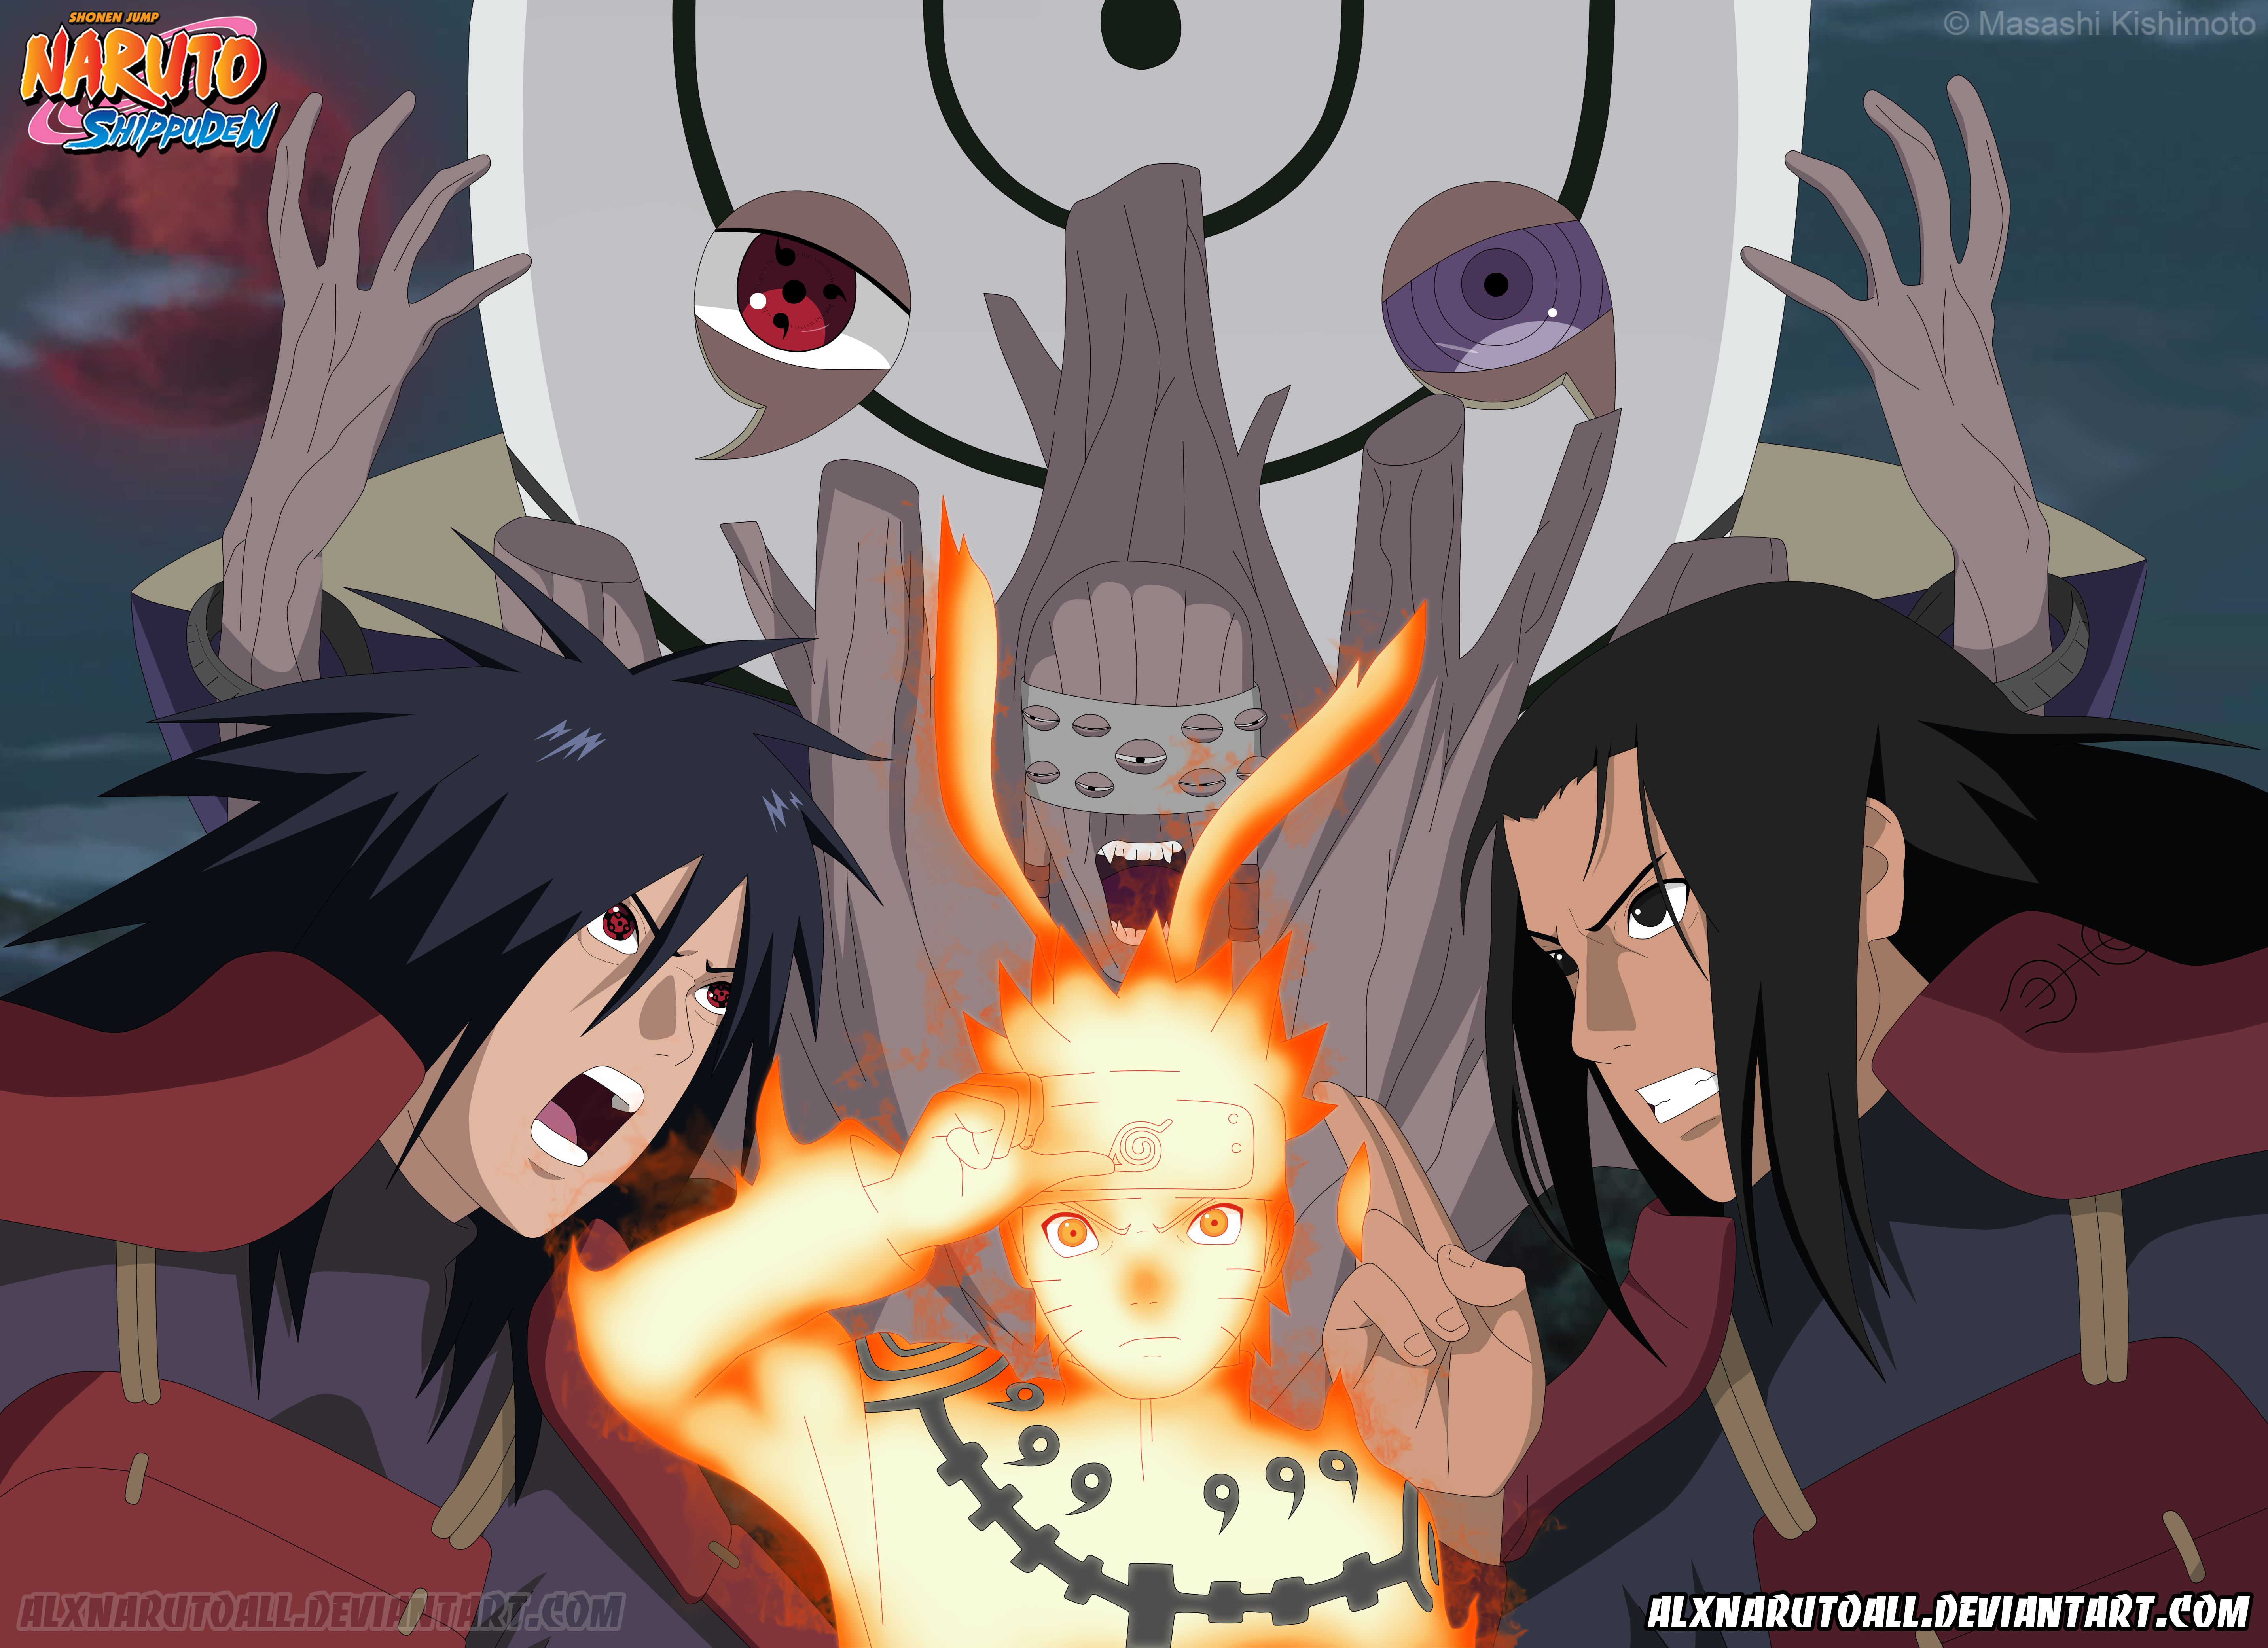 Descarga gratis la imagen Naruto, Animado, Naruto Uzumaki, Hashirama Senju, Madara Uchiha en el escritorio de tu PC